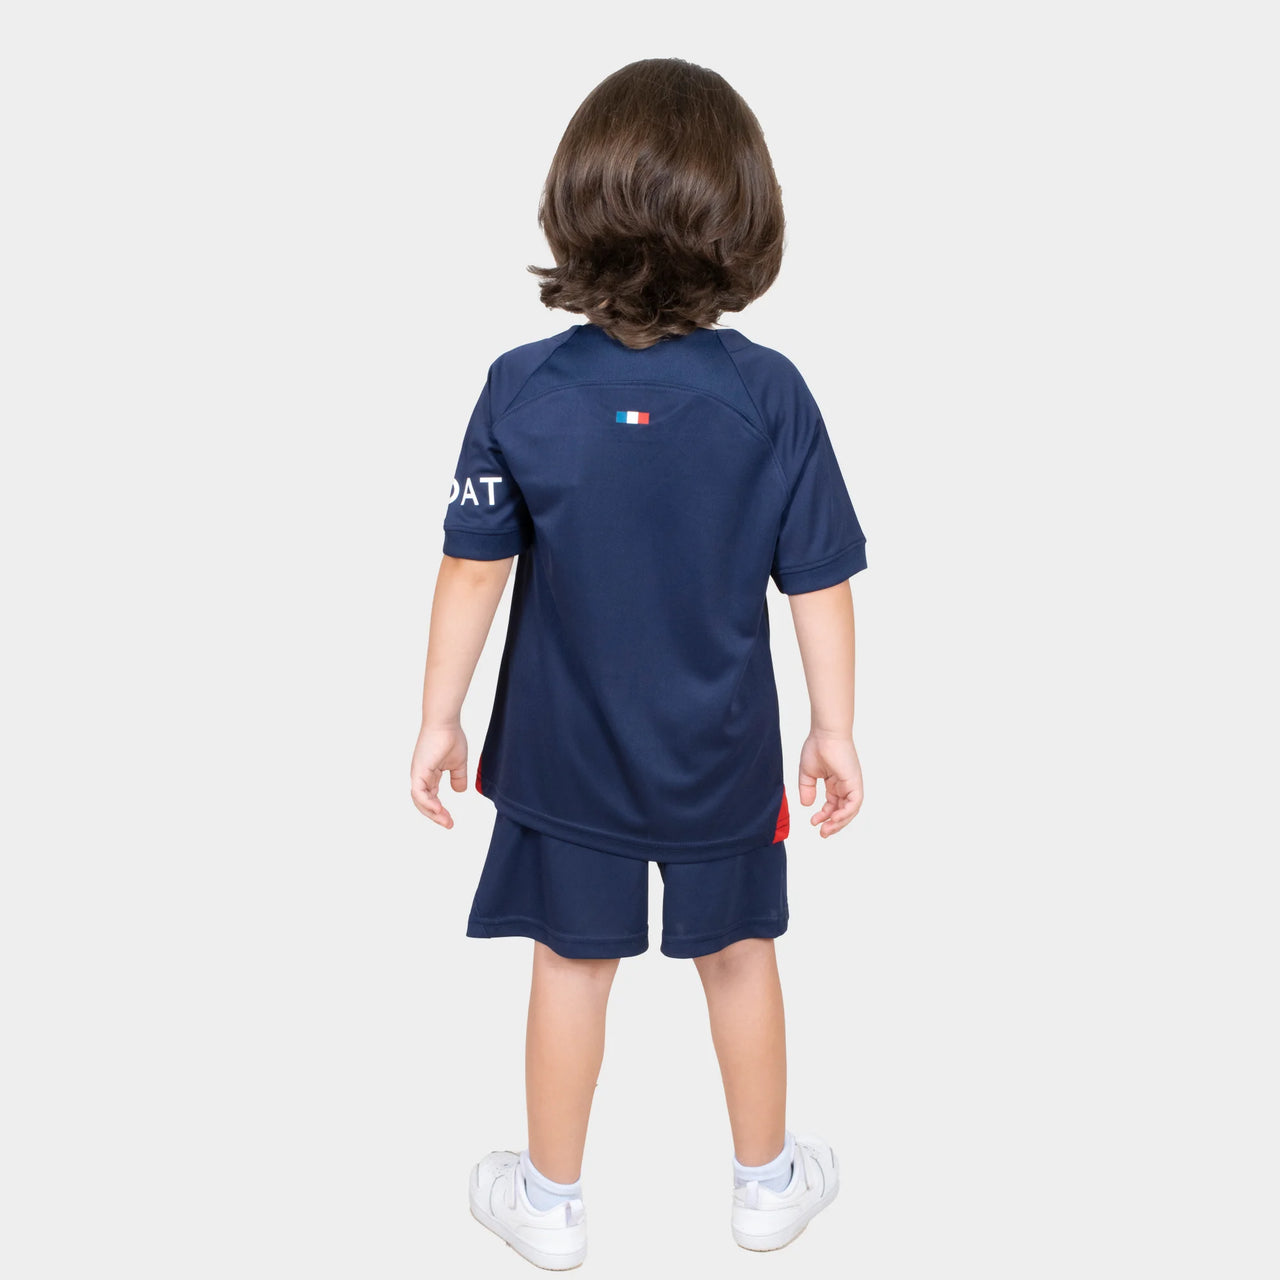 Paris Saint Germain Kids Kit Home Season 23/24 Designed By Mitani Store , Regular Fit Jersey Short Sleeves And V-Neck Collar In Dark Blue Color